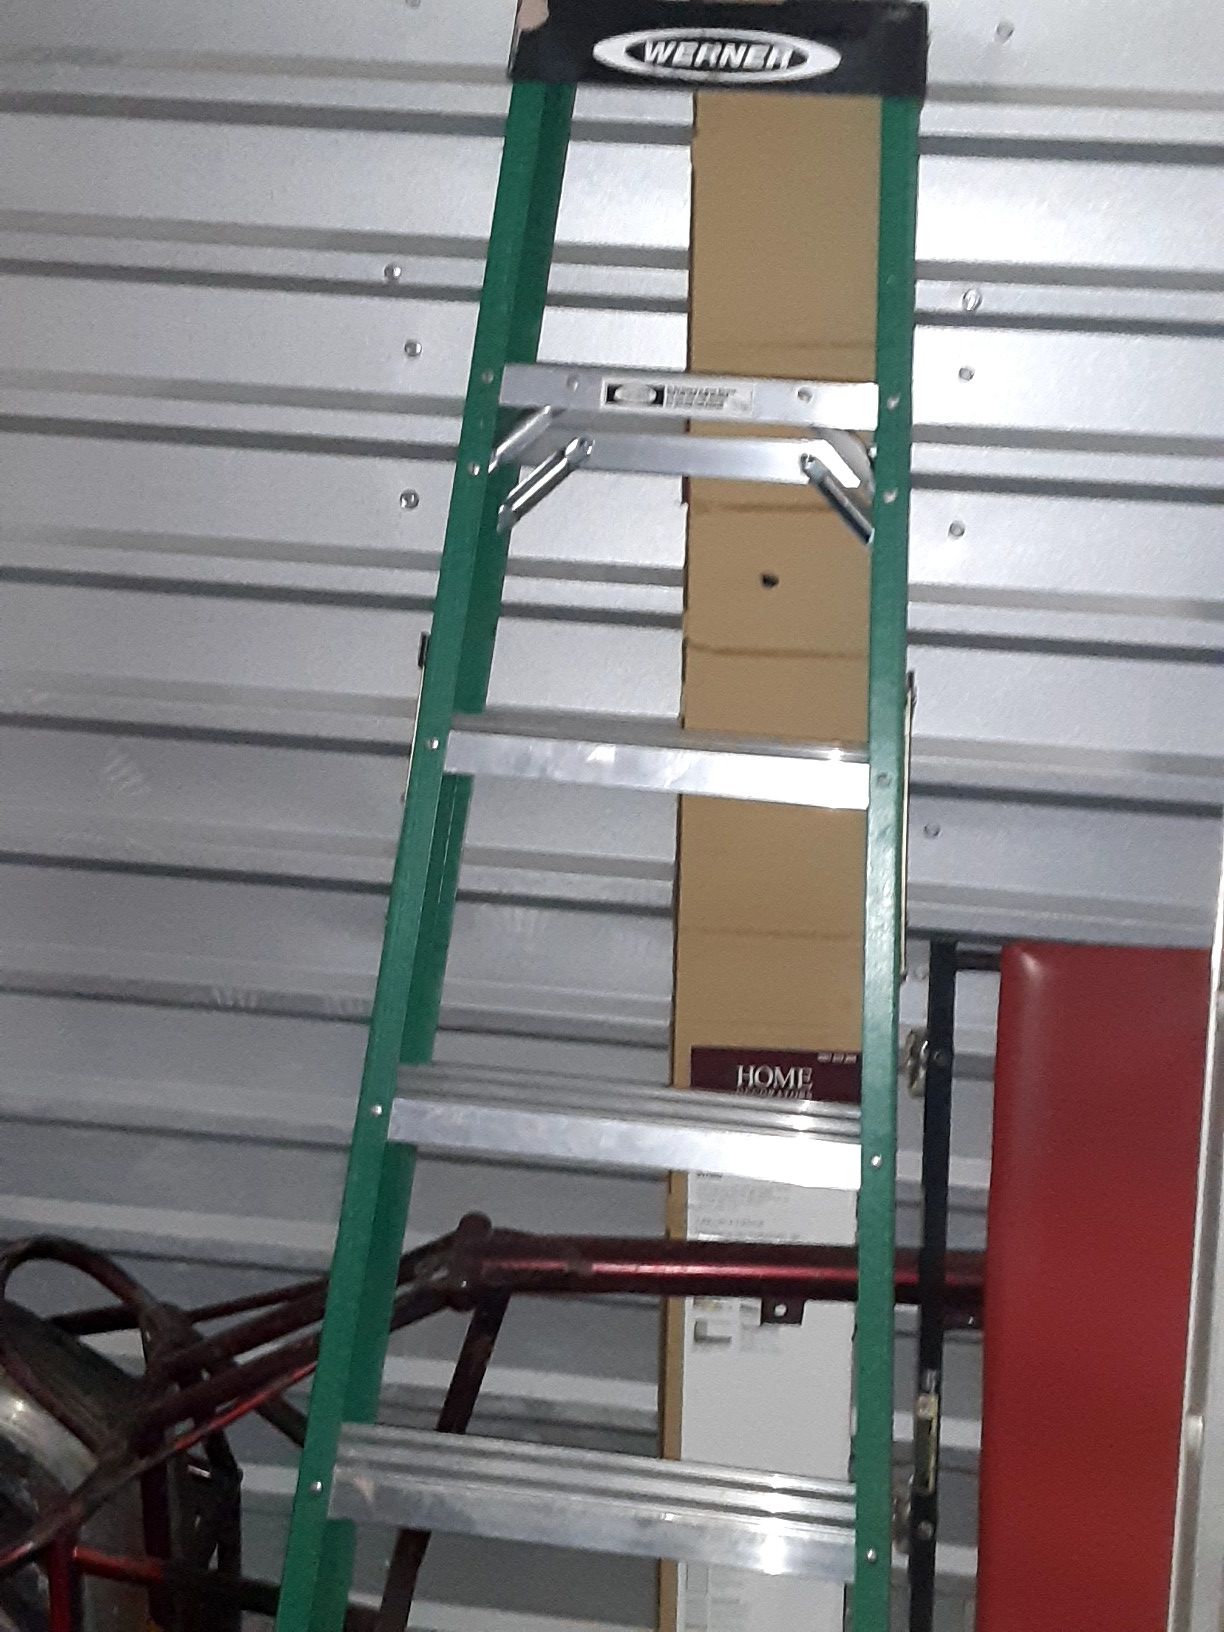 3 Werner ladders